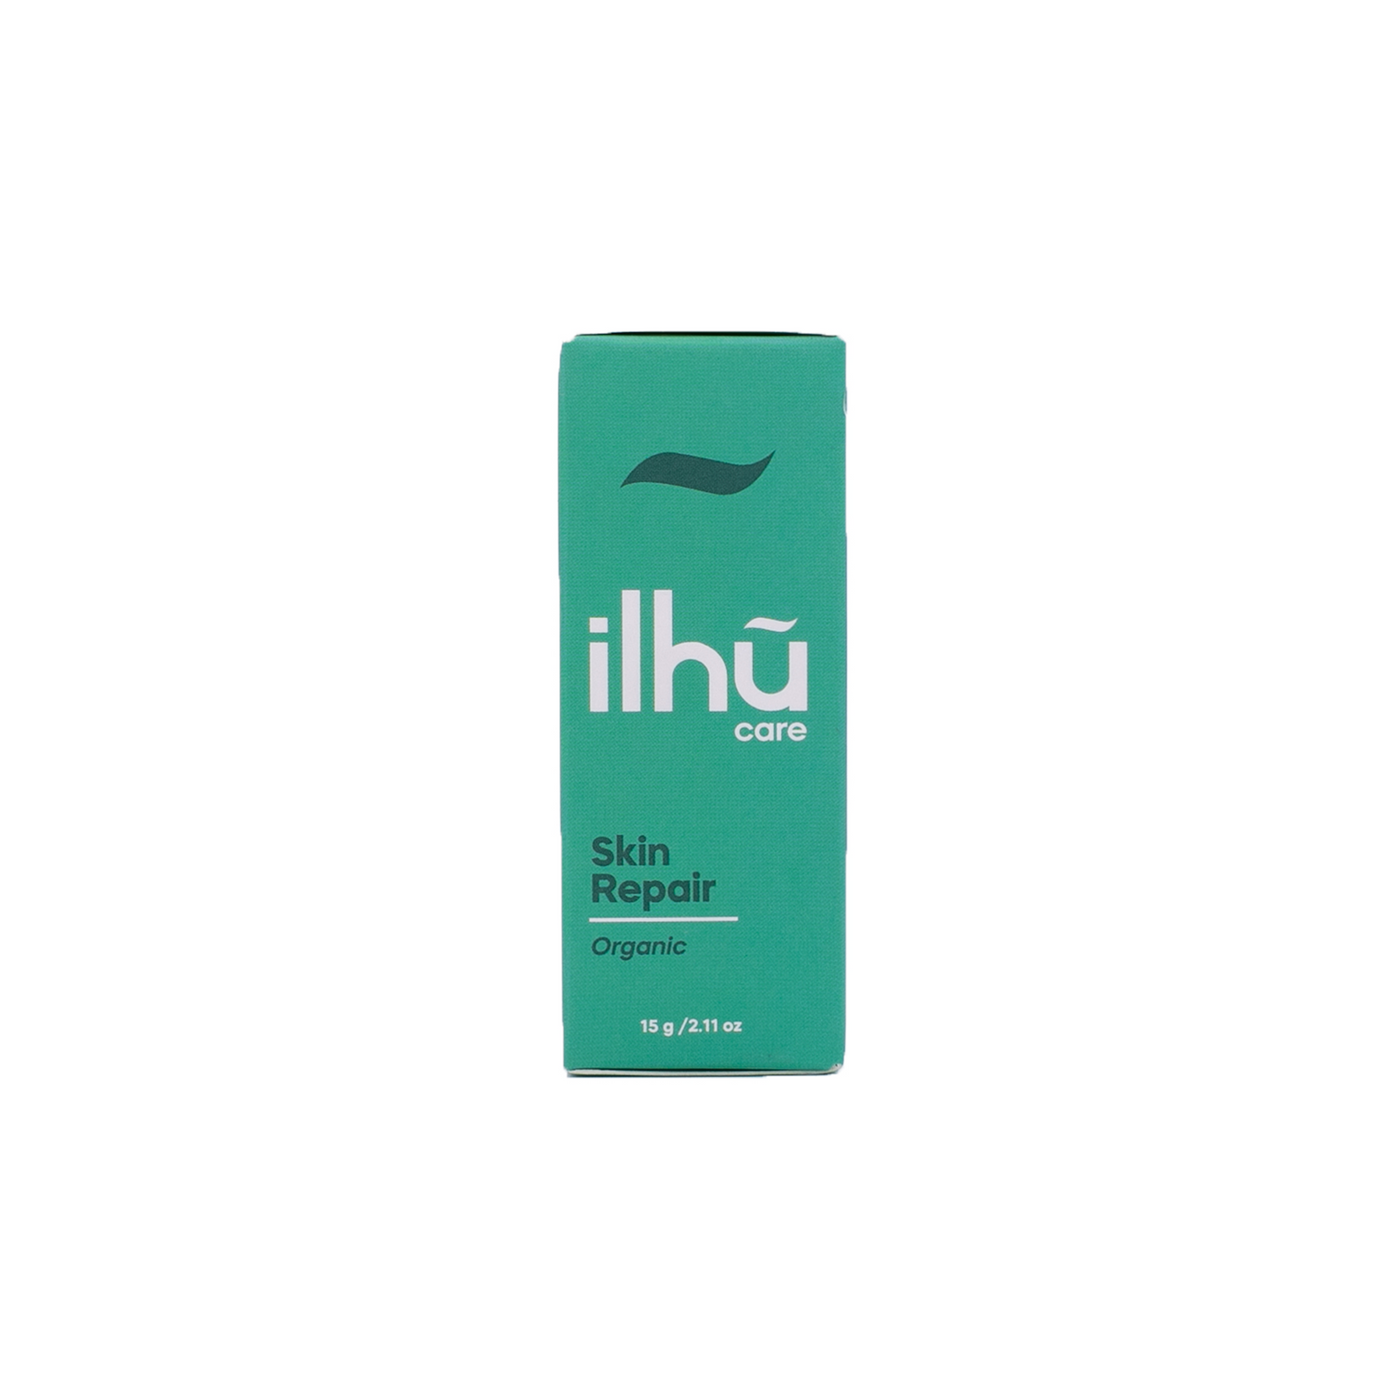 ilhu - Skin Repair 15g